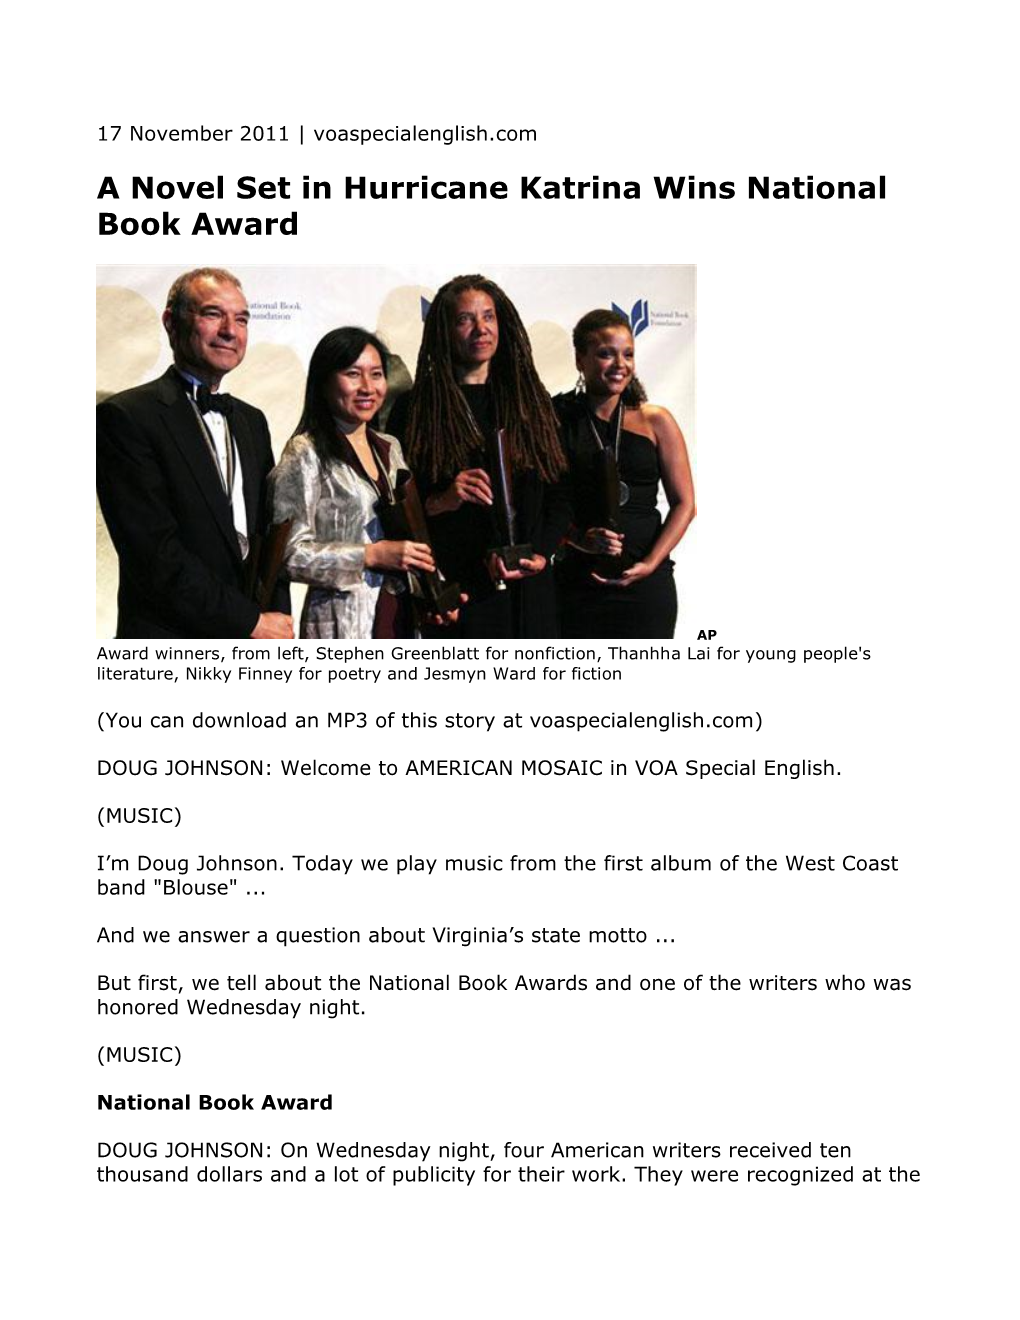 A Novel Set in Hurricane Katrina Wins National Book Award